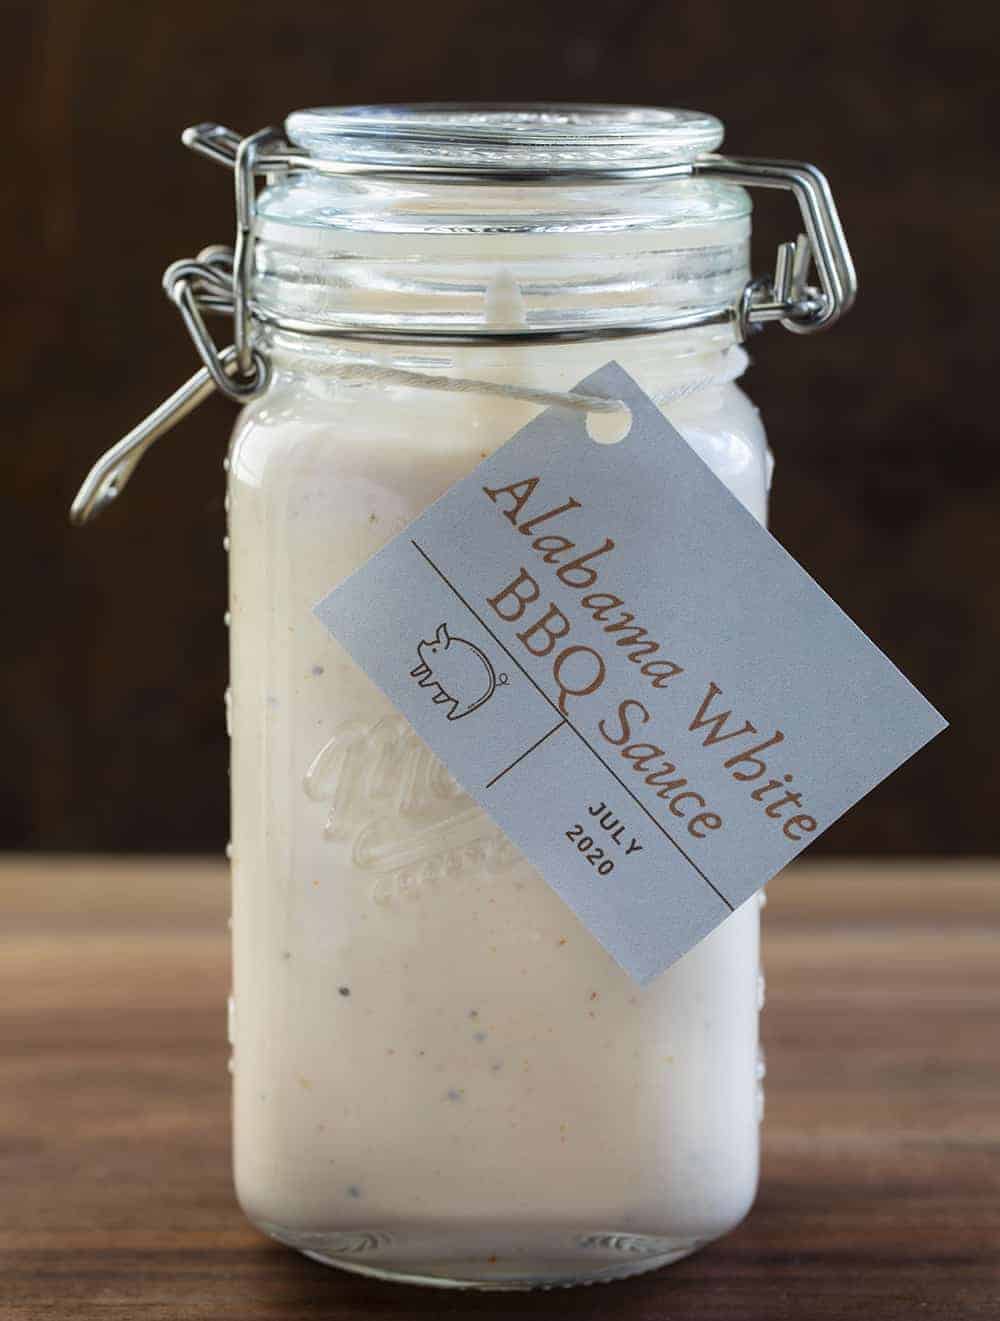 Jar of Labeled Alabama White Sauce Recipe on Cutting Board